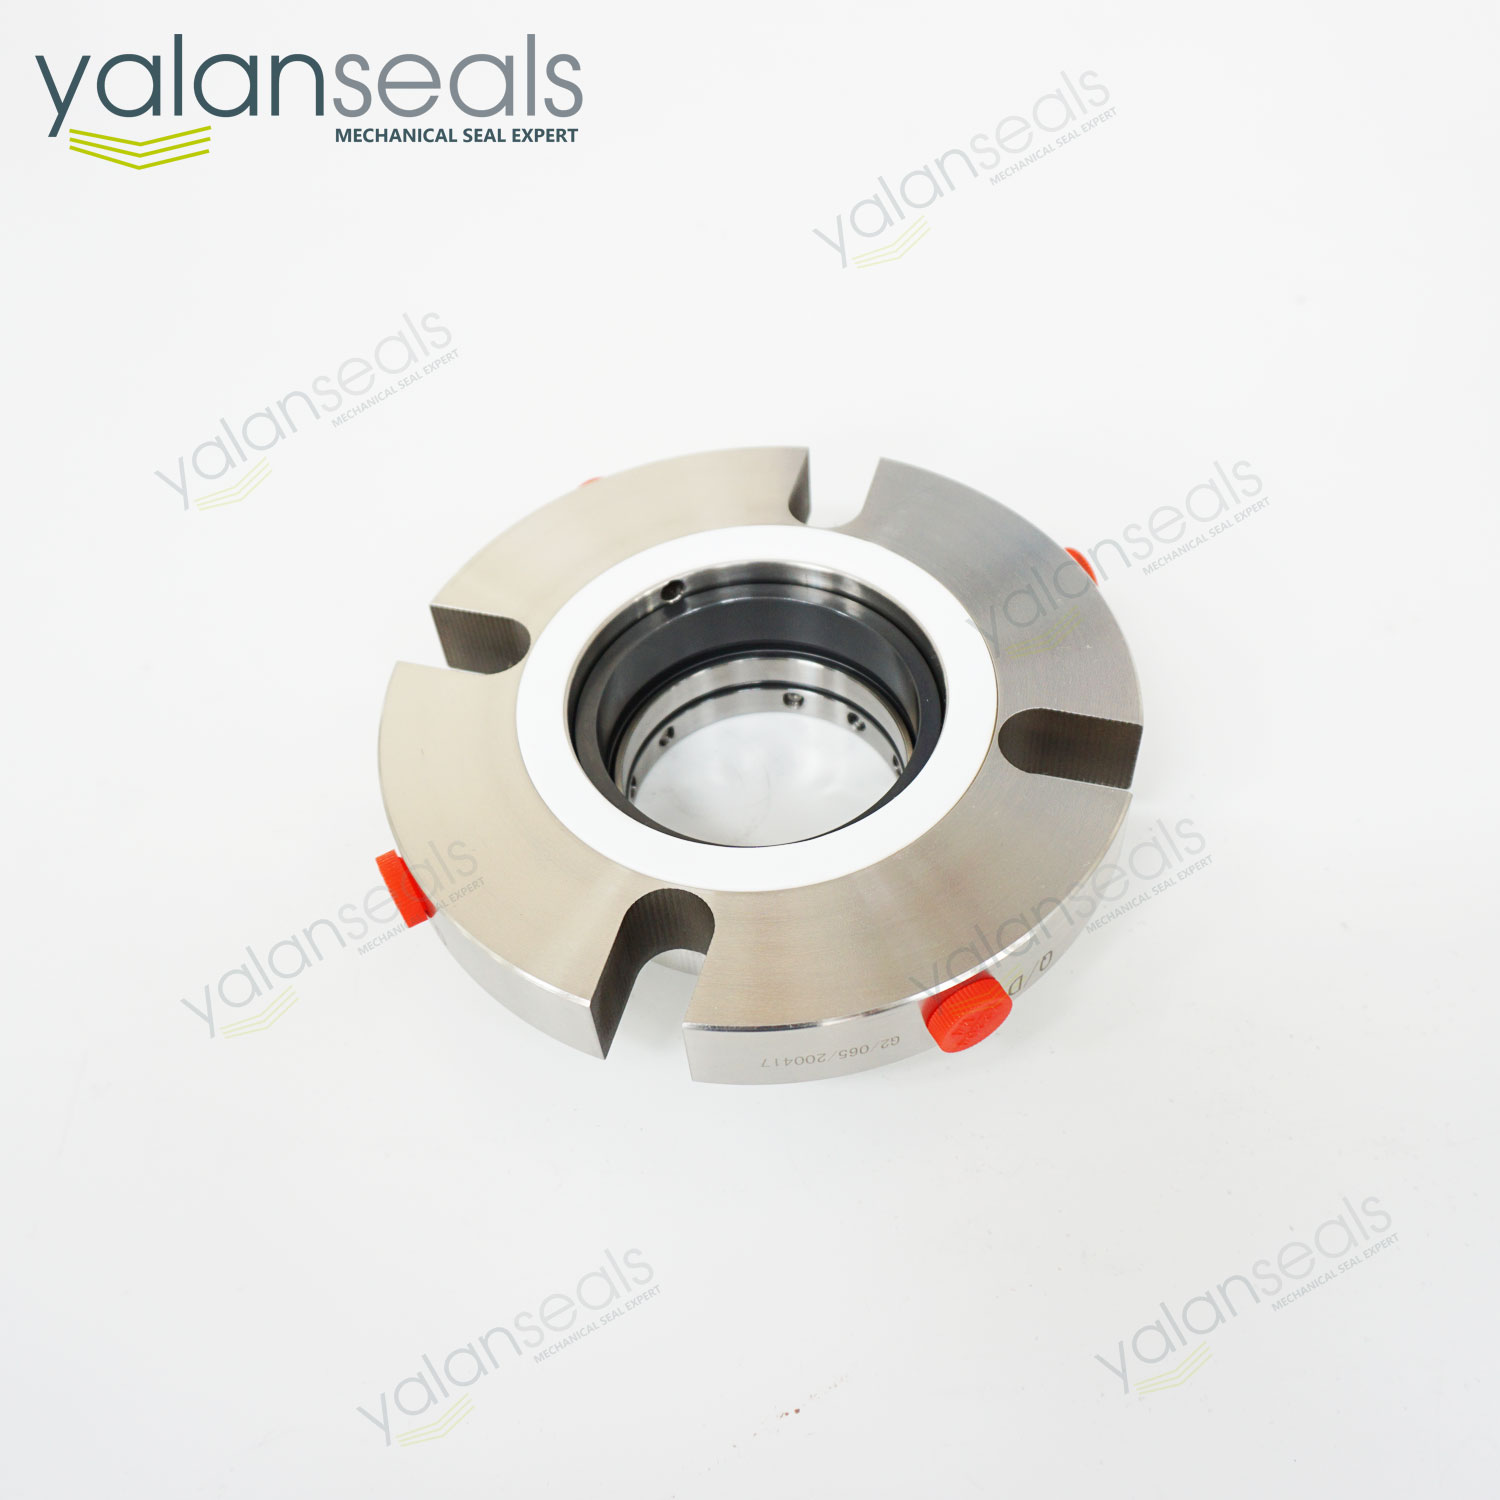 YALAN MA291 Single Cartridge Mechanical Seal